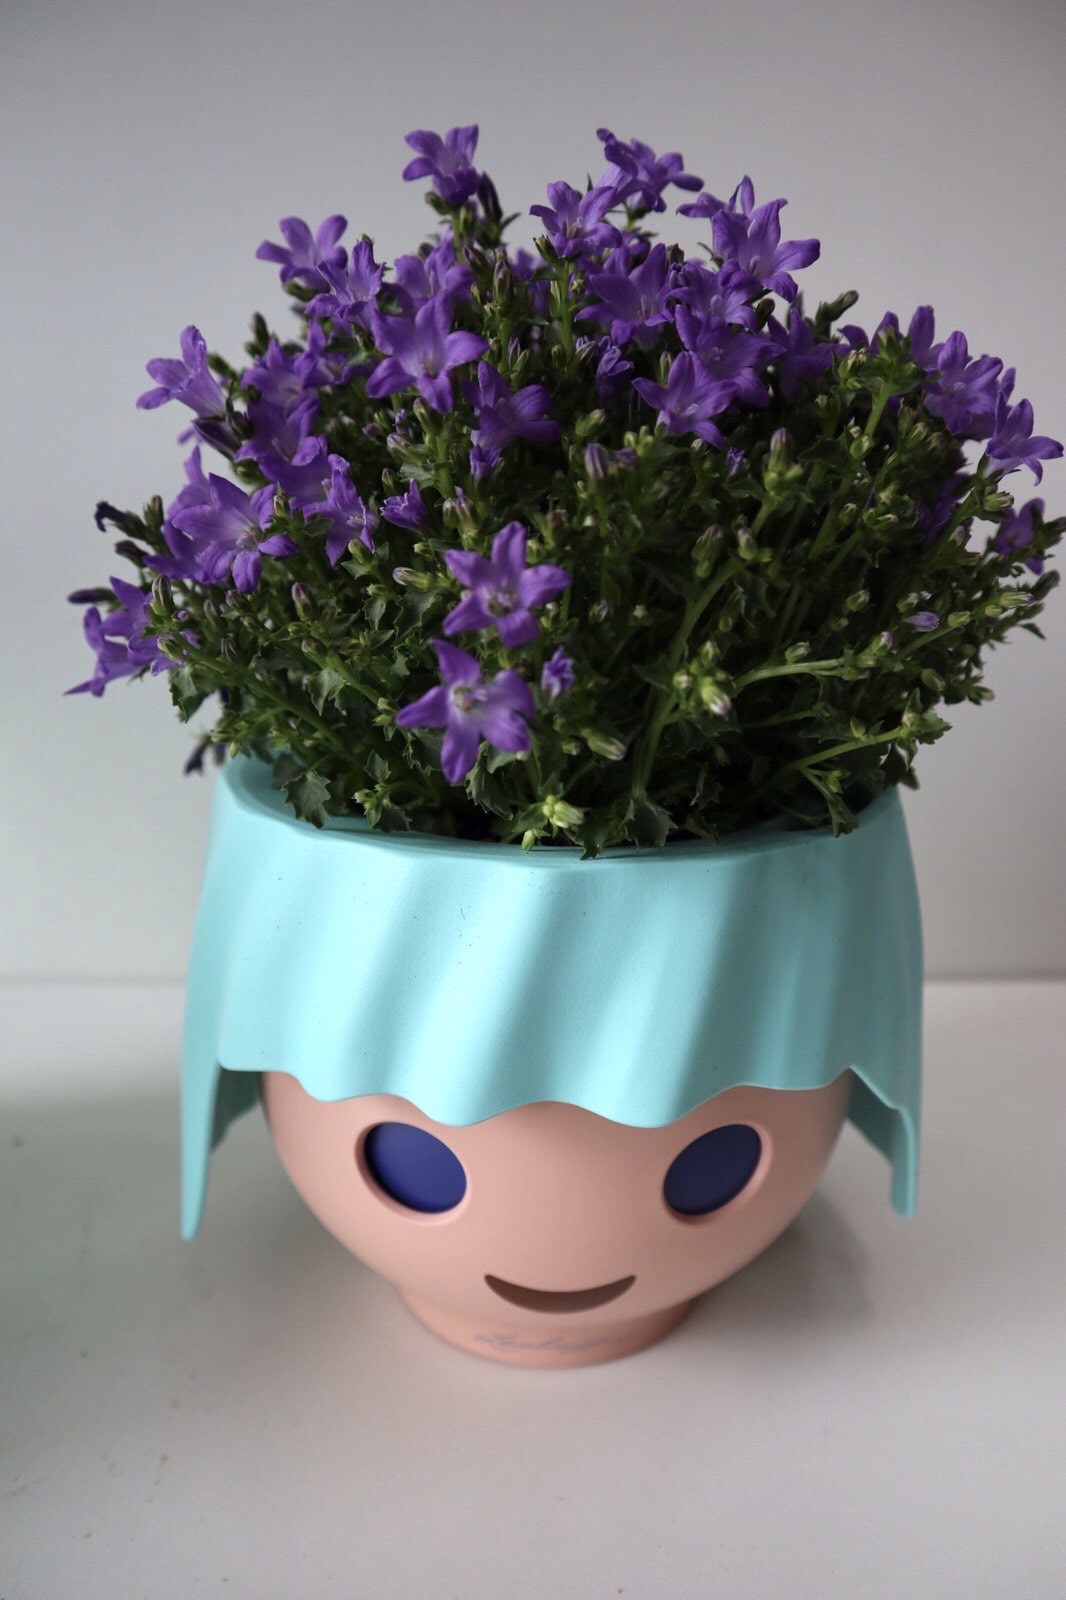 Blue-playmobil-pot-with-purple-bells.jpg